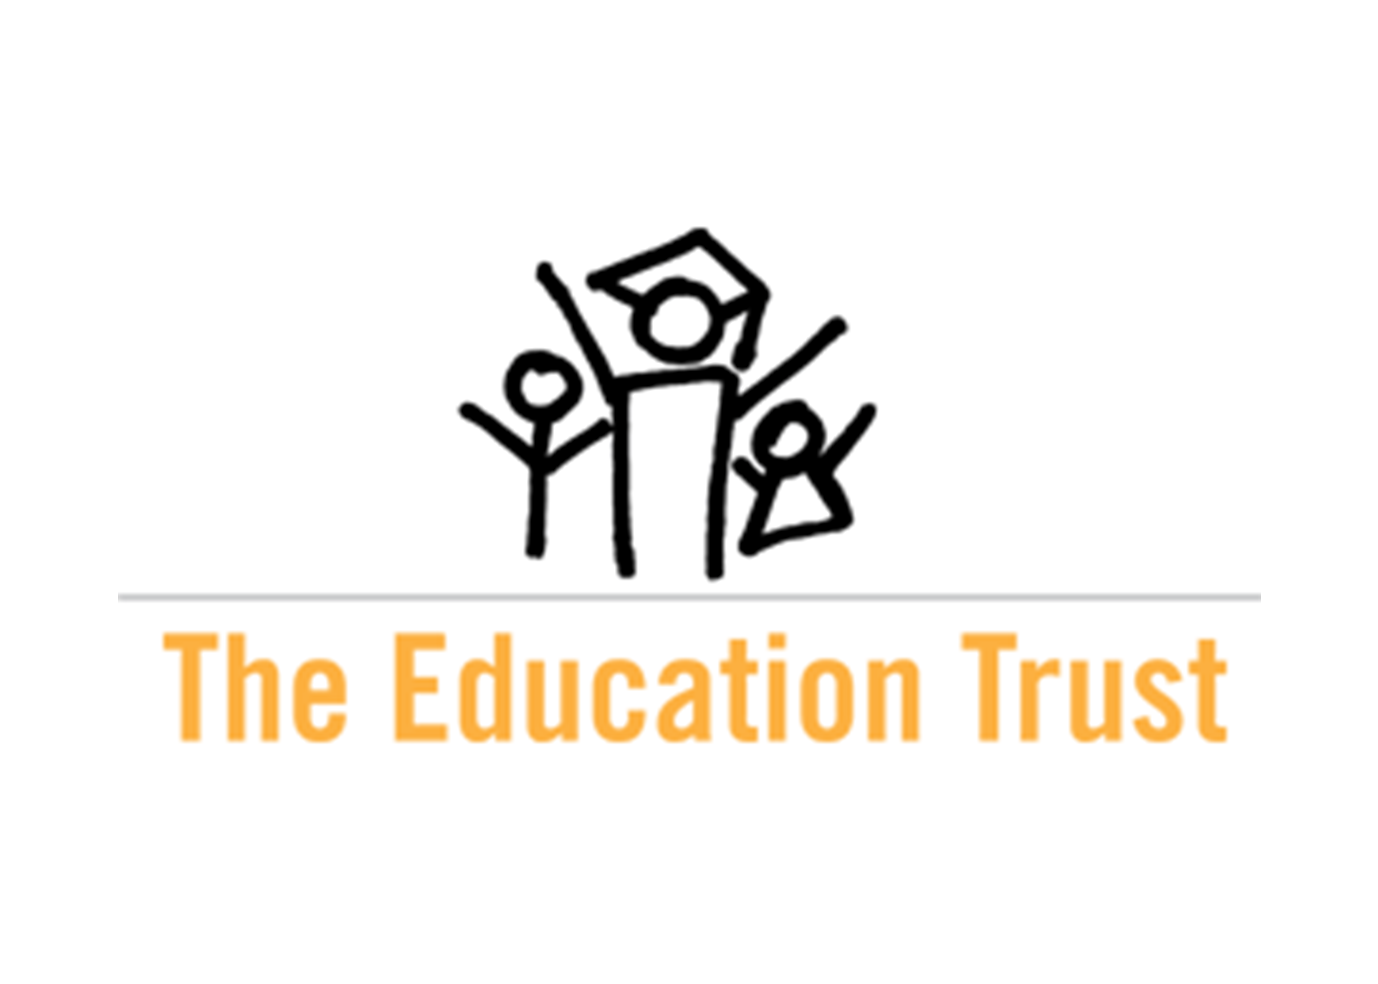 The Education Trust logo